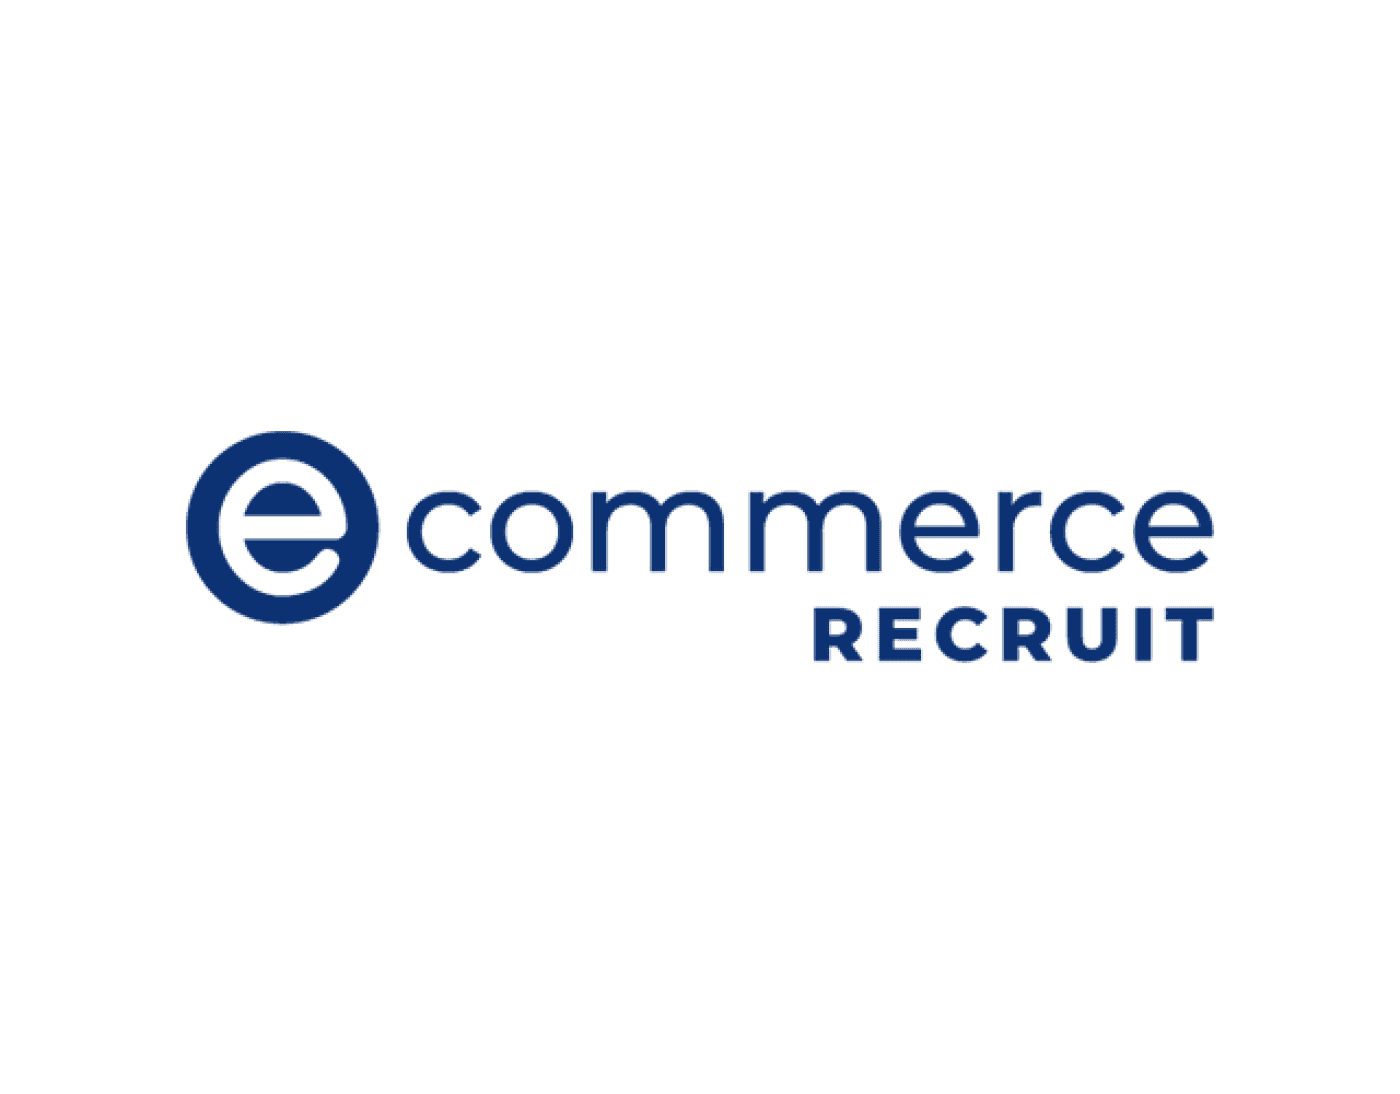 ecommerce-recruit-640x500-01.png